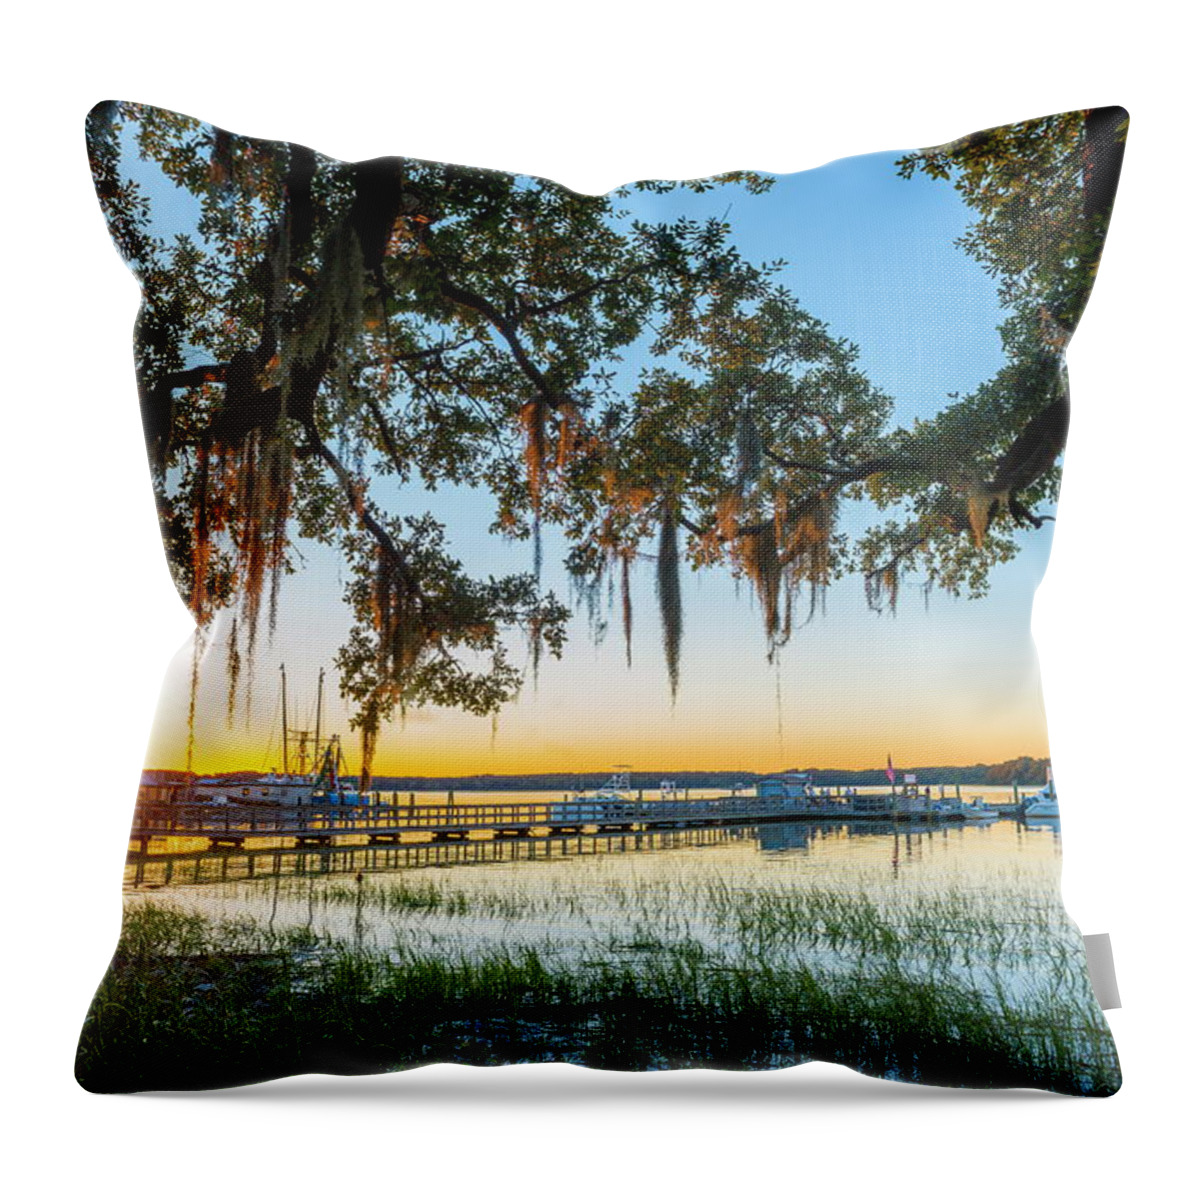 Estock Throw Pillow featuring the digital art Skull Creek, Hilton Head, South Carolina by Werner Bertsch